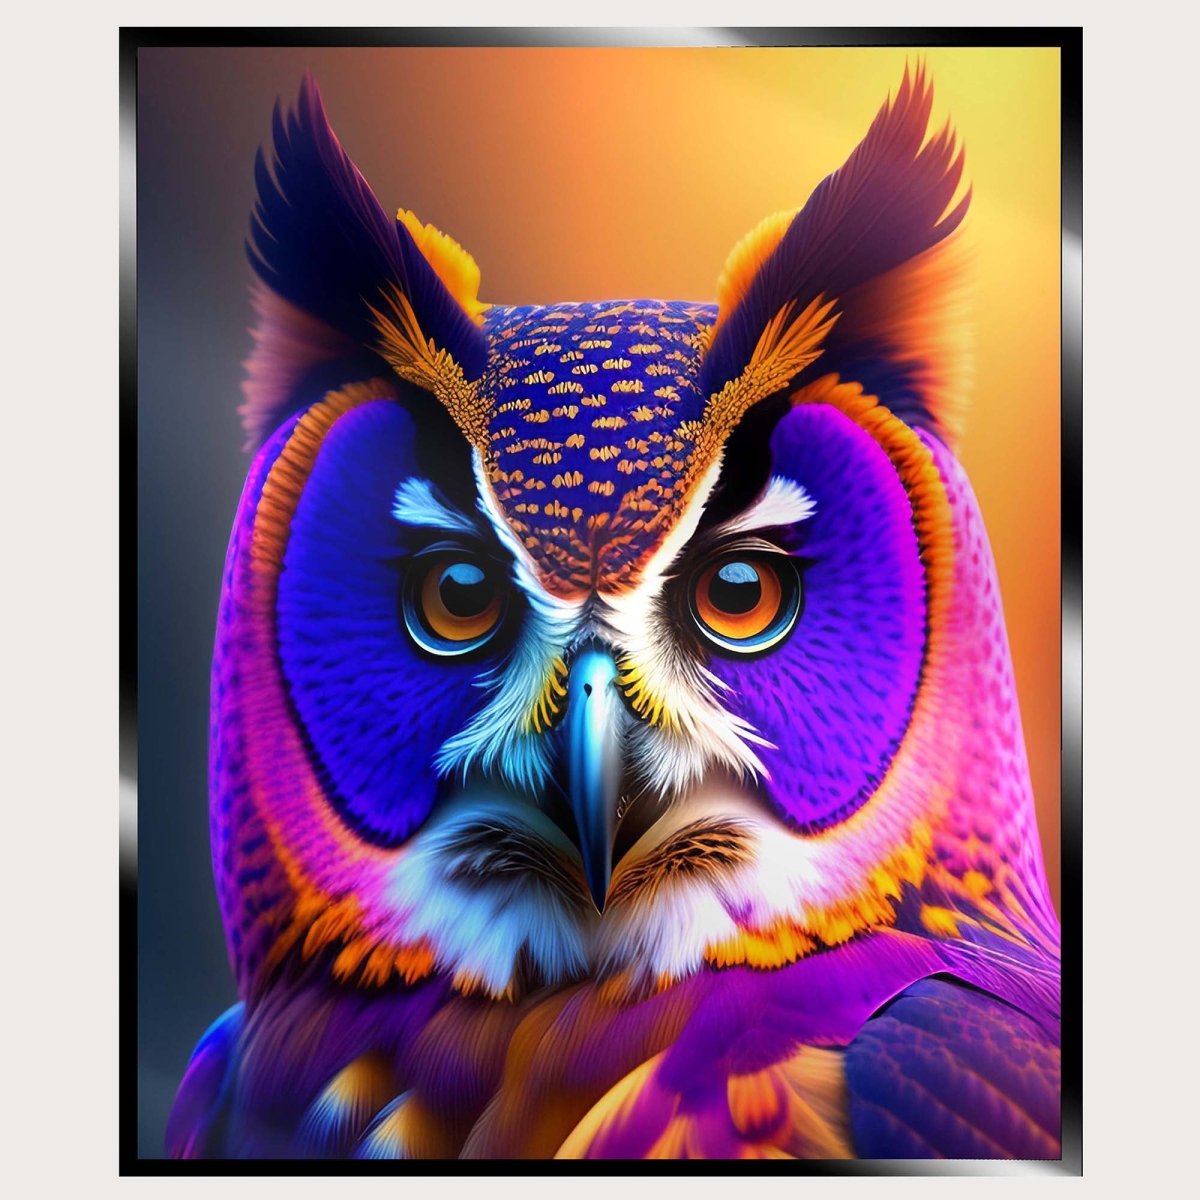 Illuminated Wall Art - Owl - madaboutneon